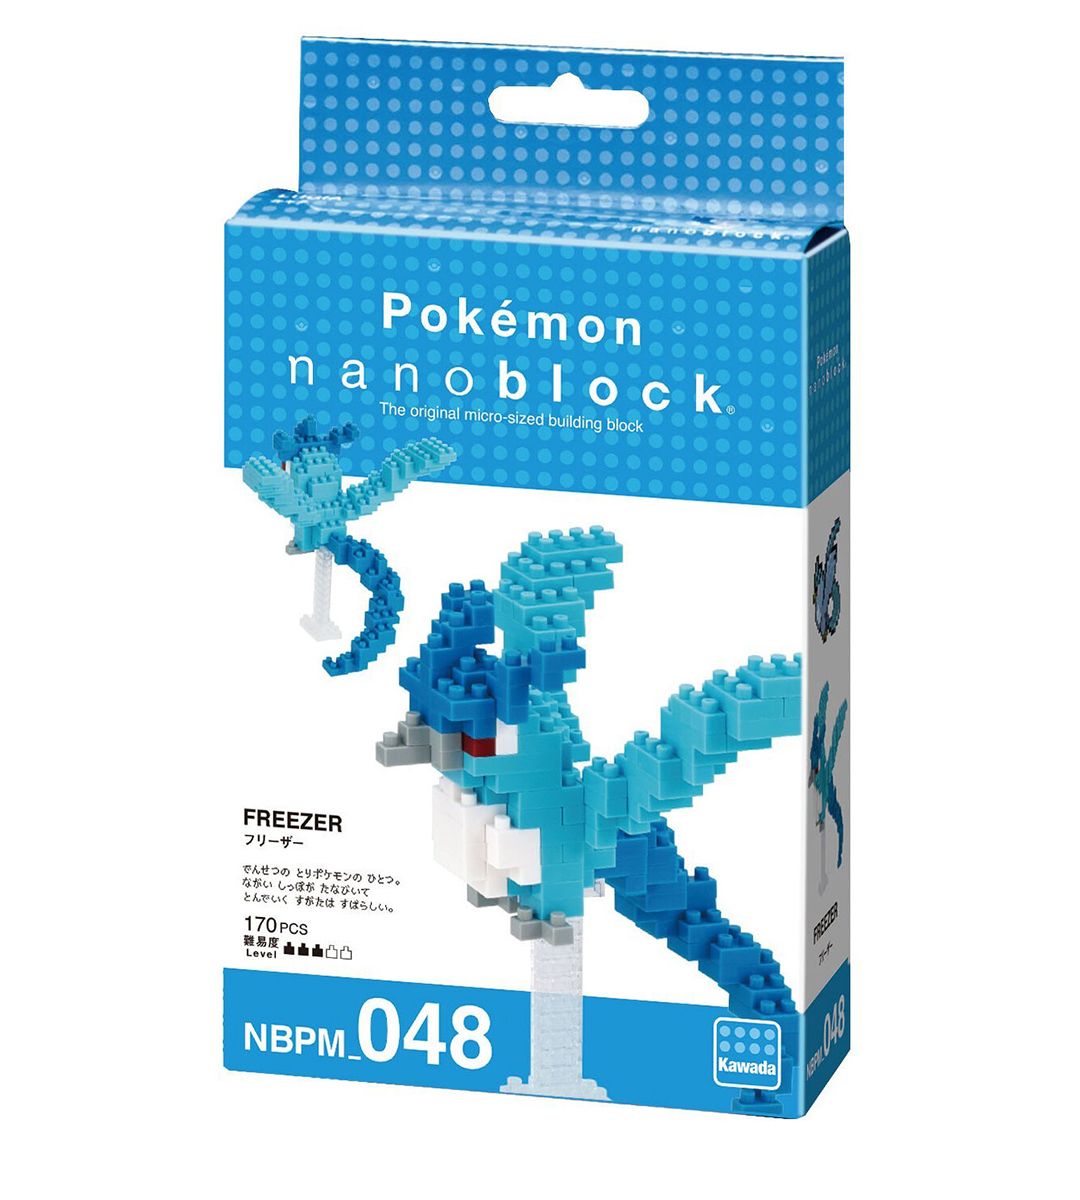 Pokémon x Nanoblock - Artikodin - NBPM 048